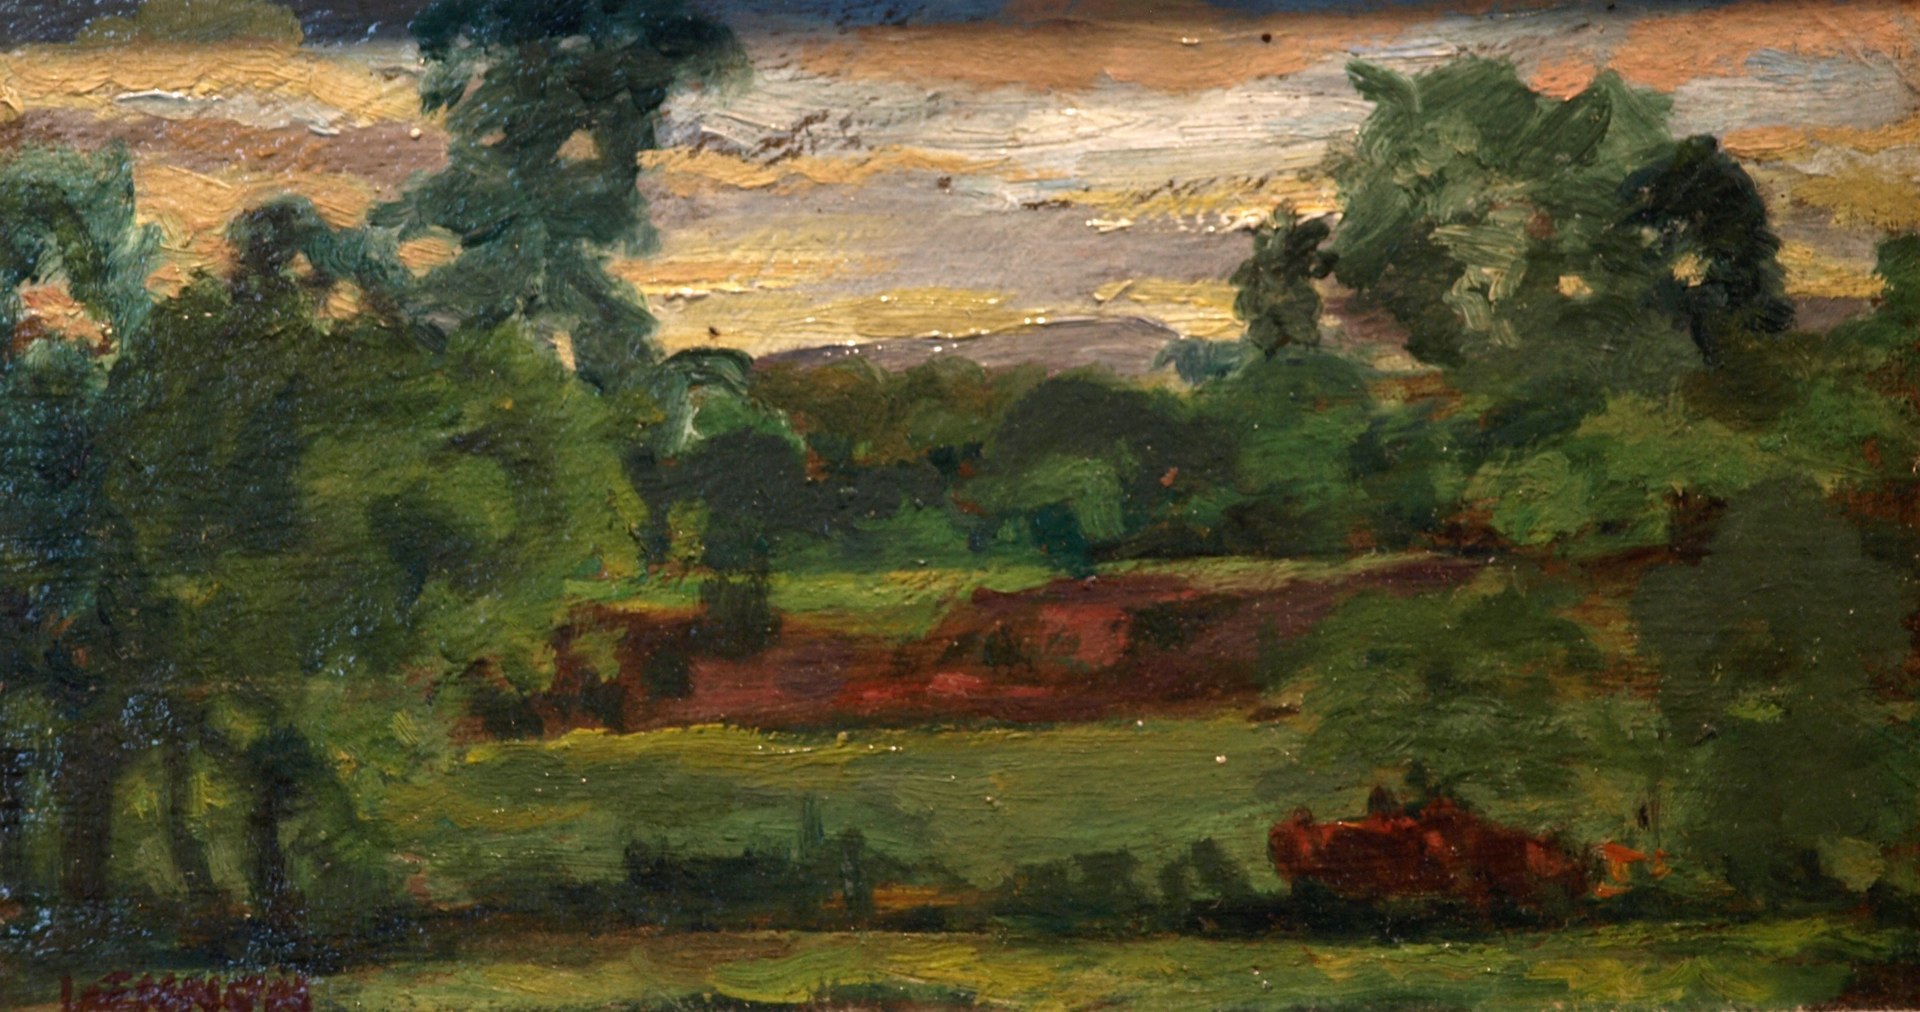 Sunset Sky - Summer, Oil on Panel, 6 x 10 Inches, by Bernard Lennon, $225